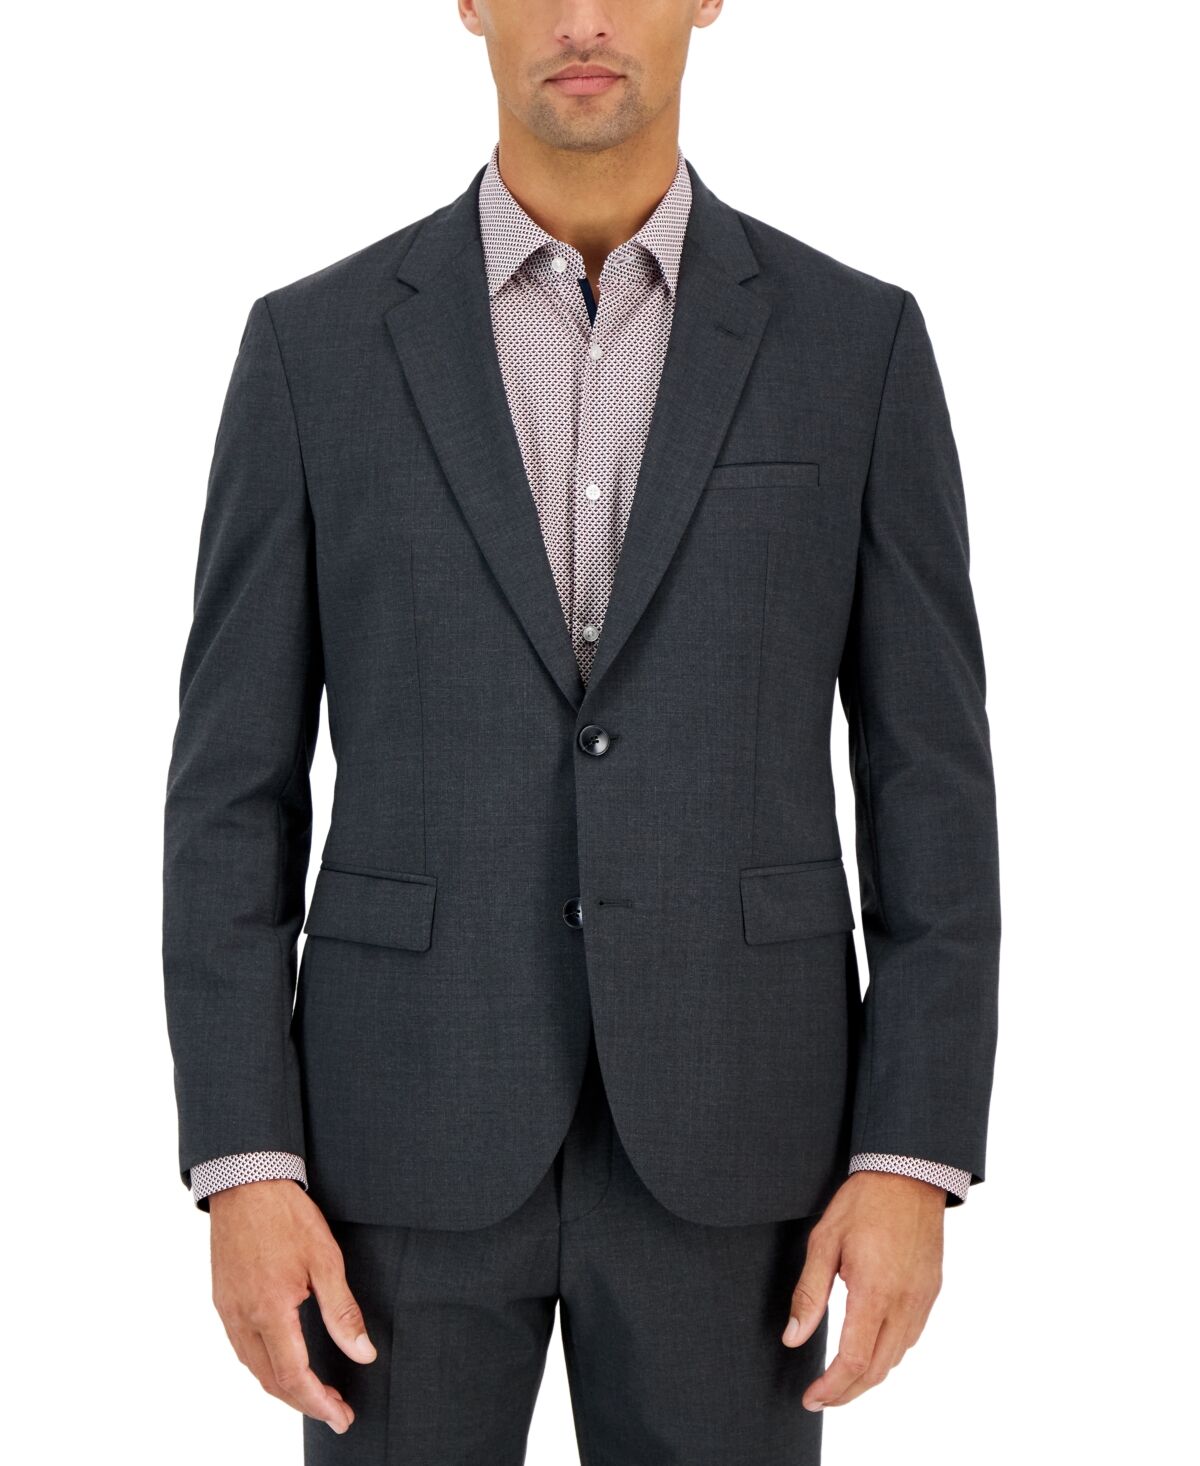 Hugo Boss by Hugo Boss Men's Modern-Fit Solid Wool-Blend Suit Jacket - Dark Gray